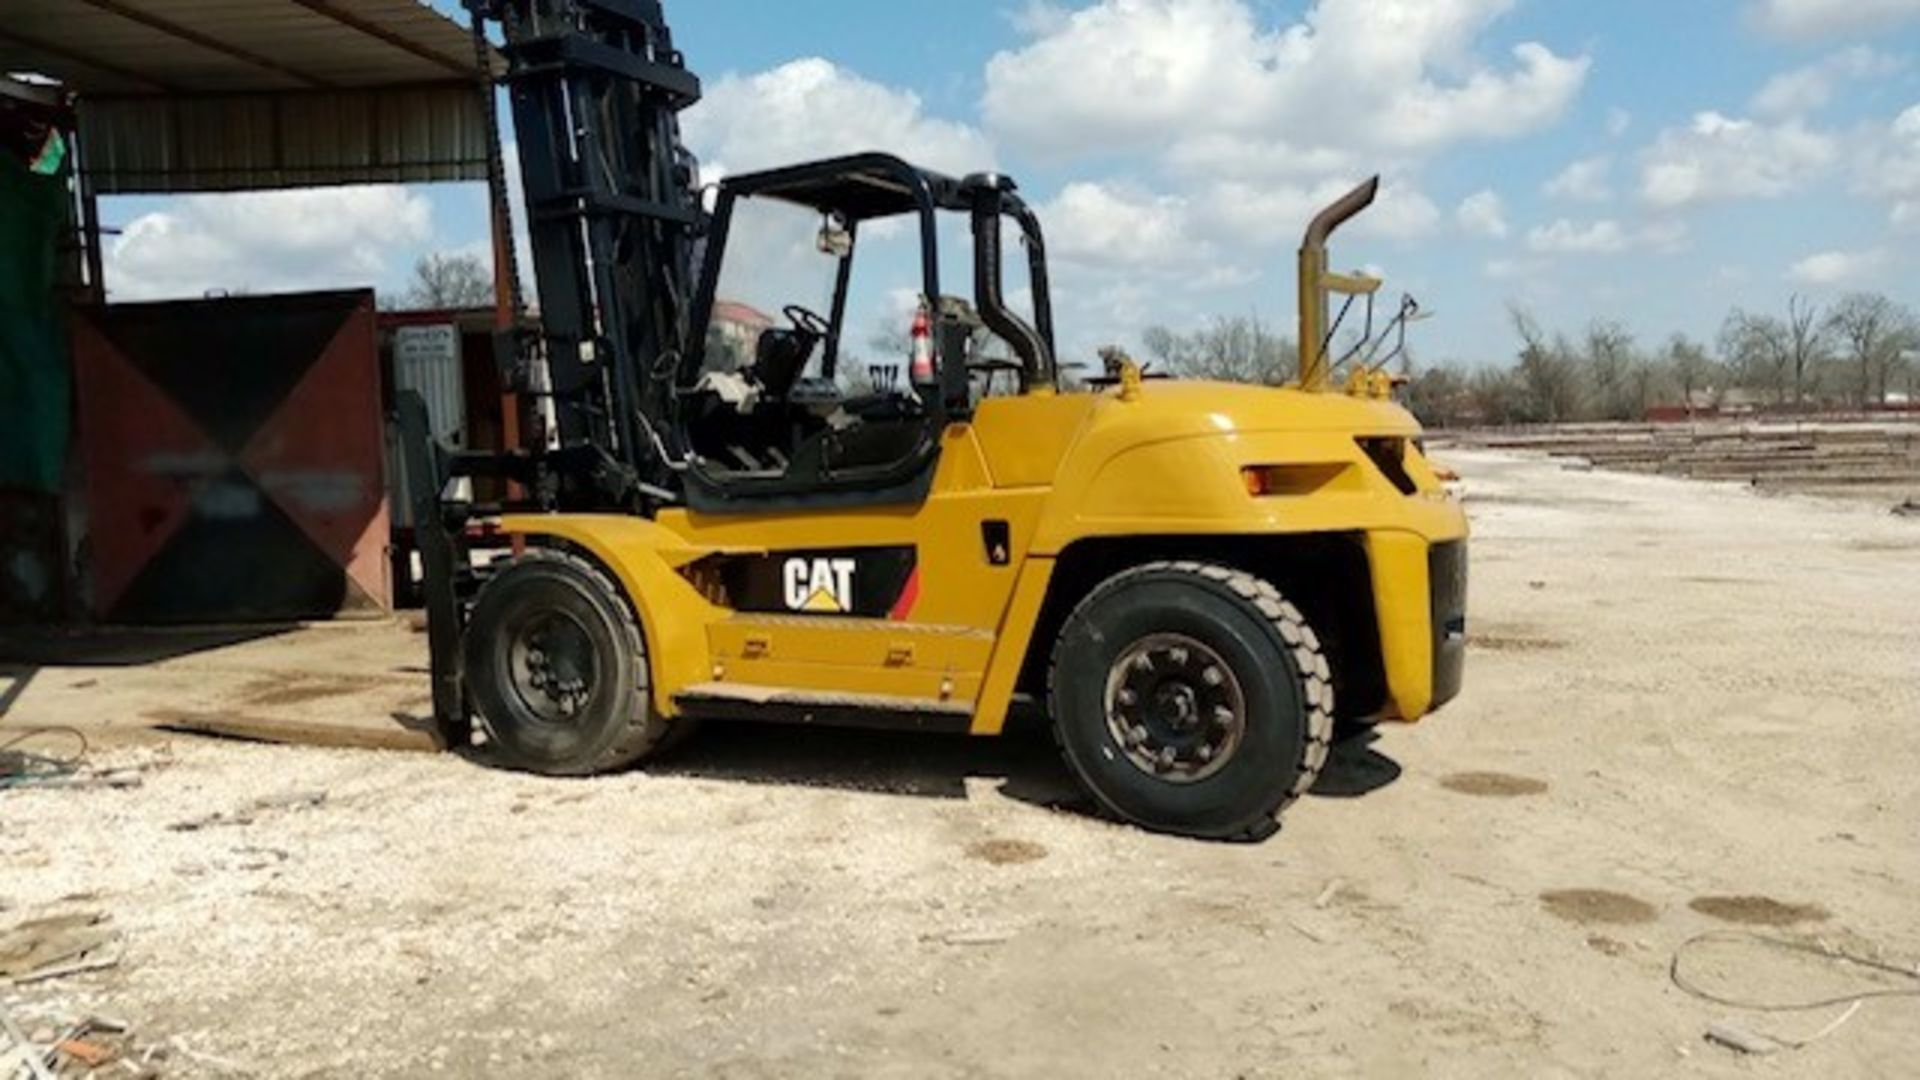 CAT Model P33000 Forklift, 33,000 # capacity - Image 13 of 13